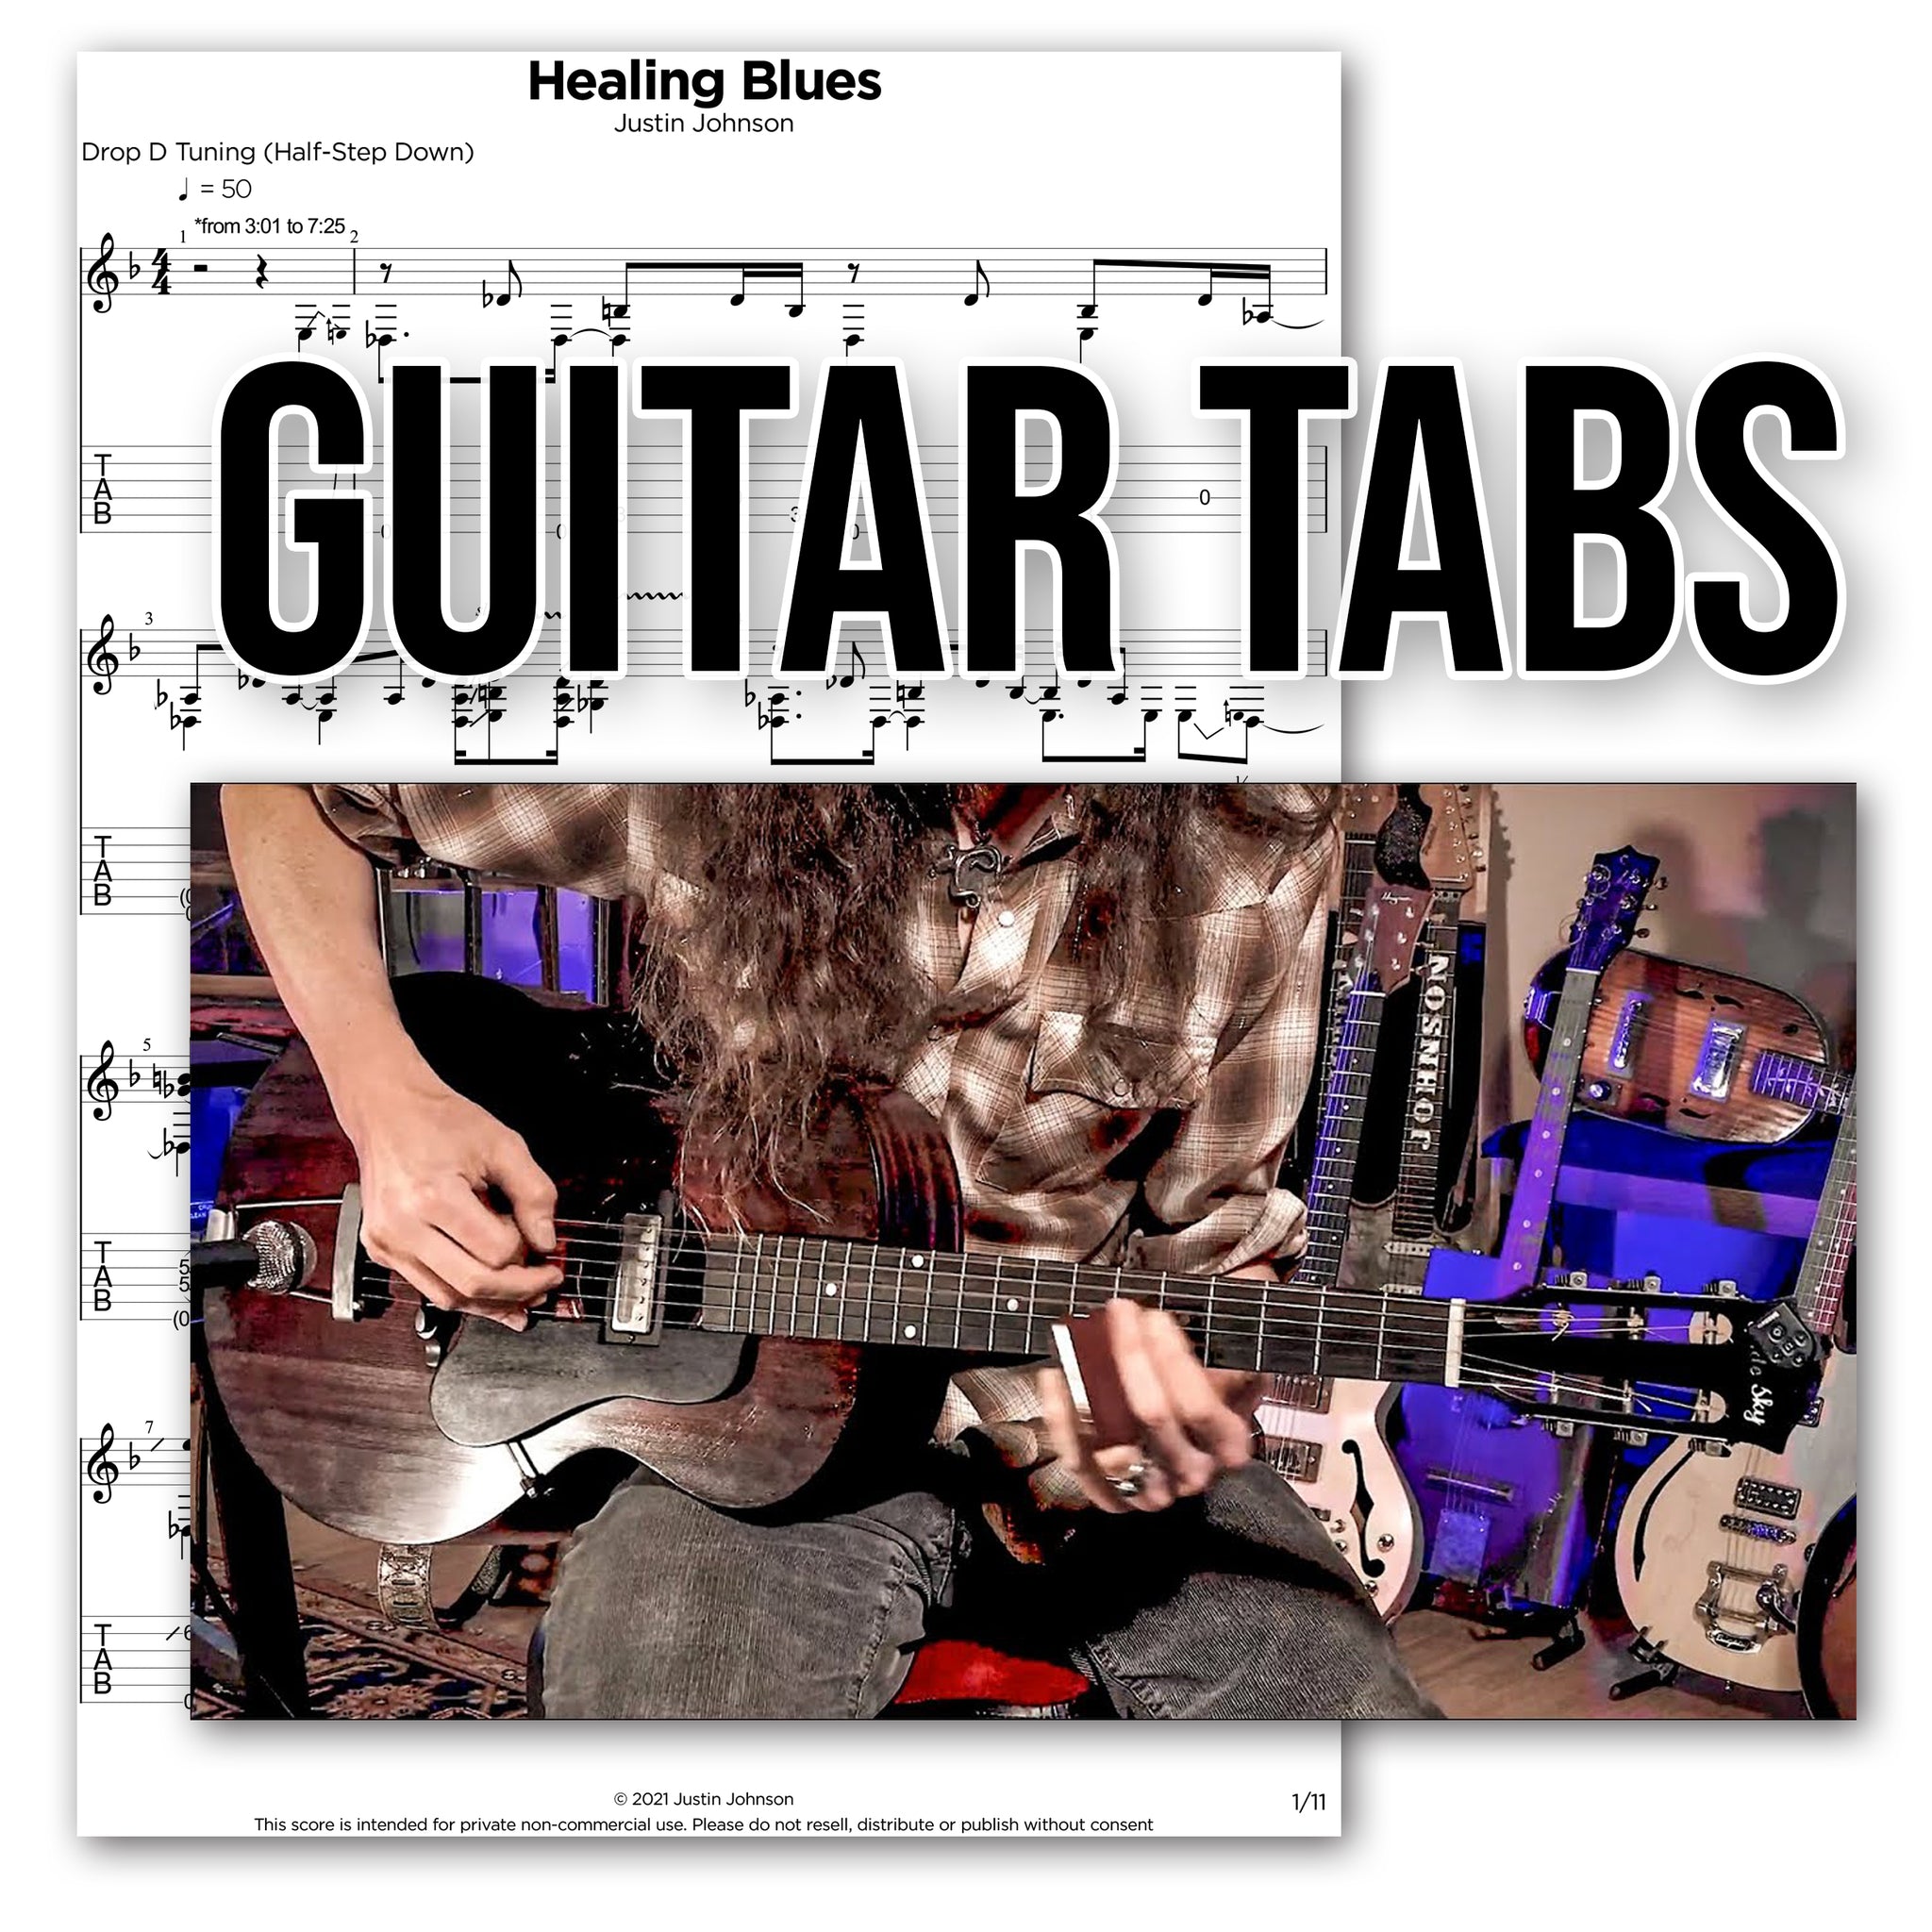 GUITAR TABS - "Healing Blues"